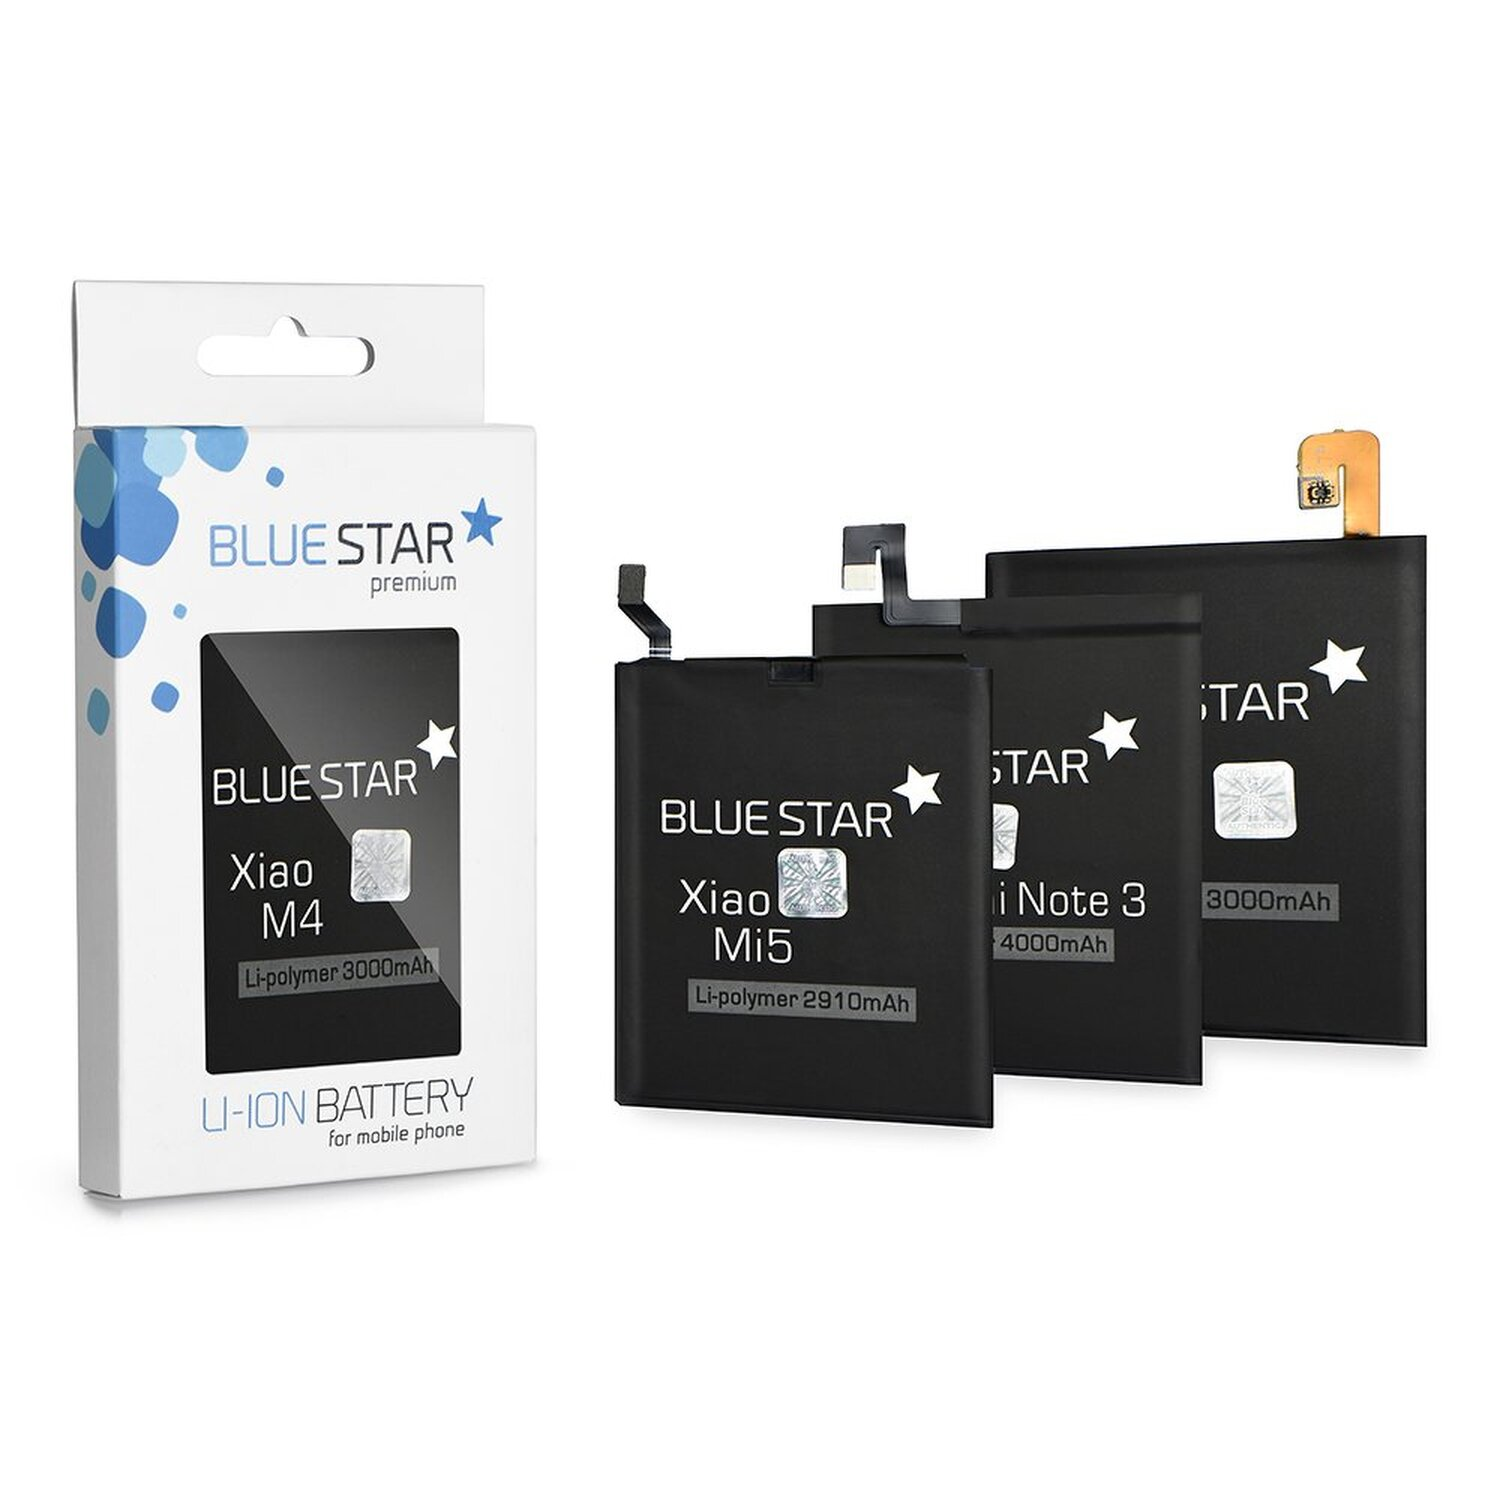 BLUESTAR Akku für Galaxy A5 Samsung Li-Ion Handyakku